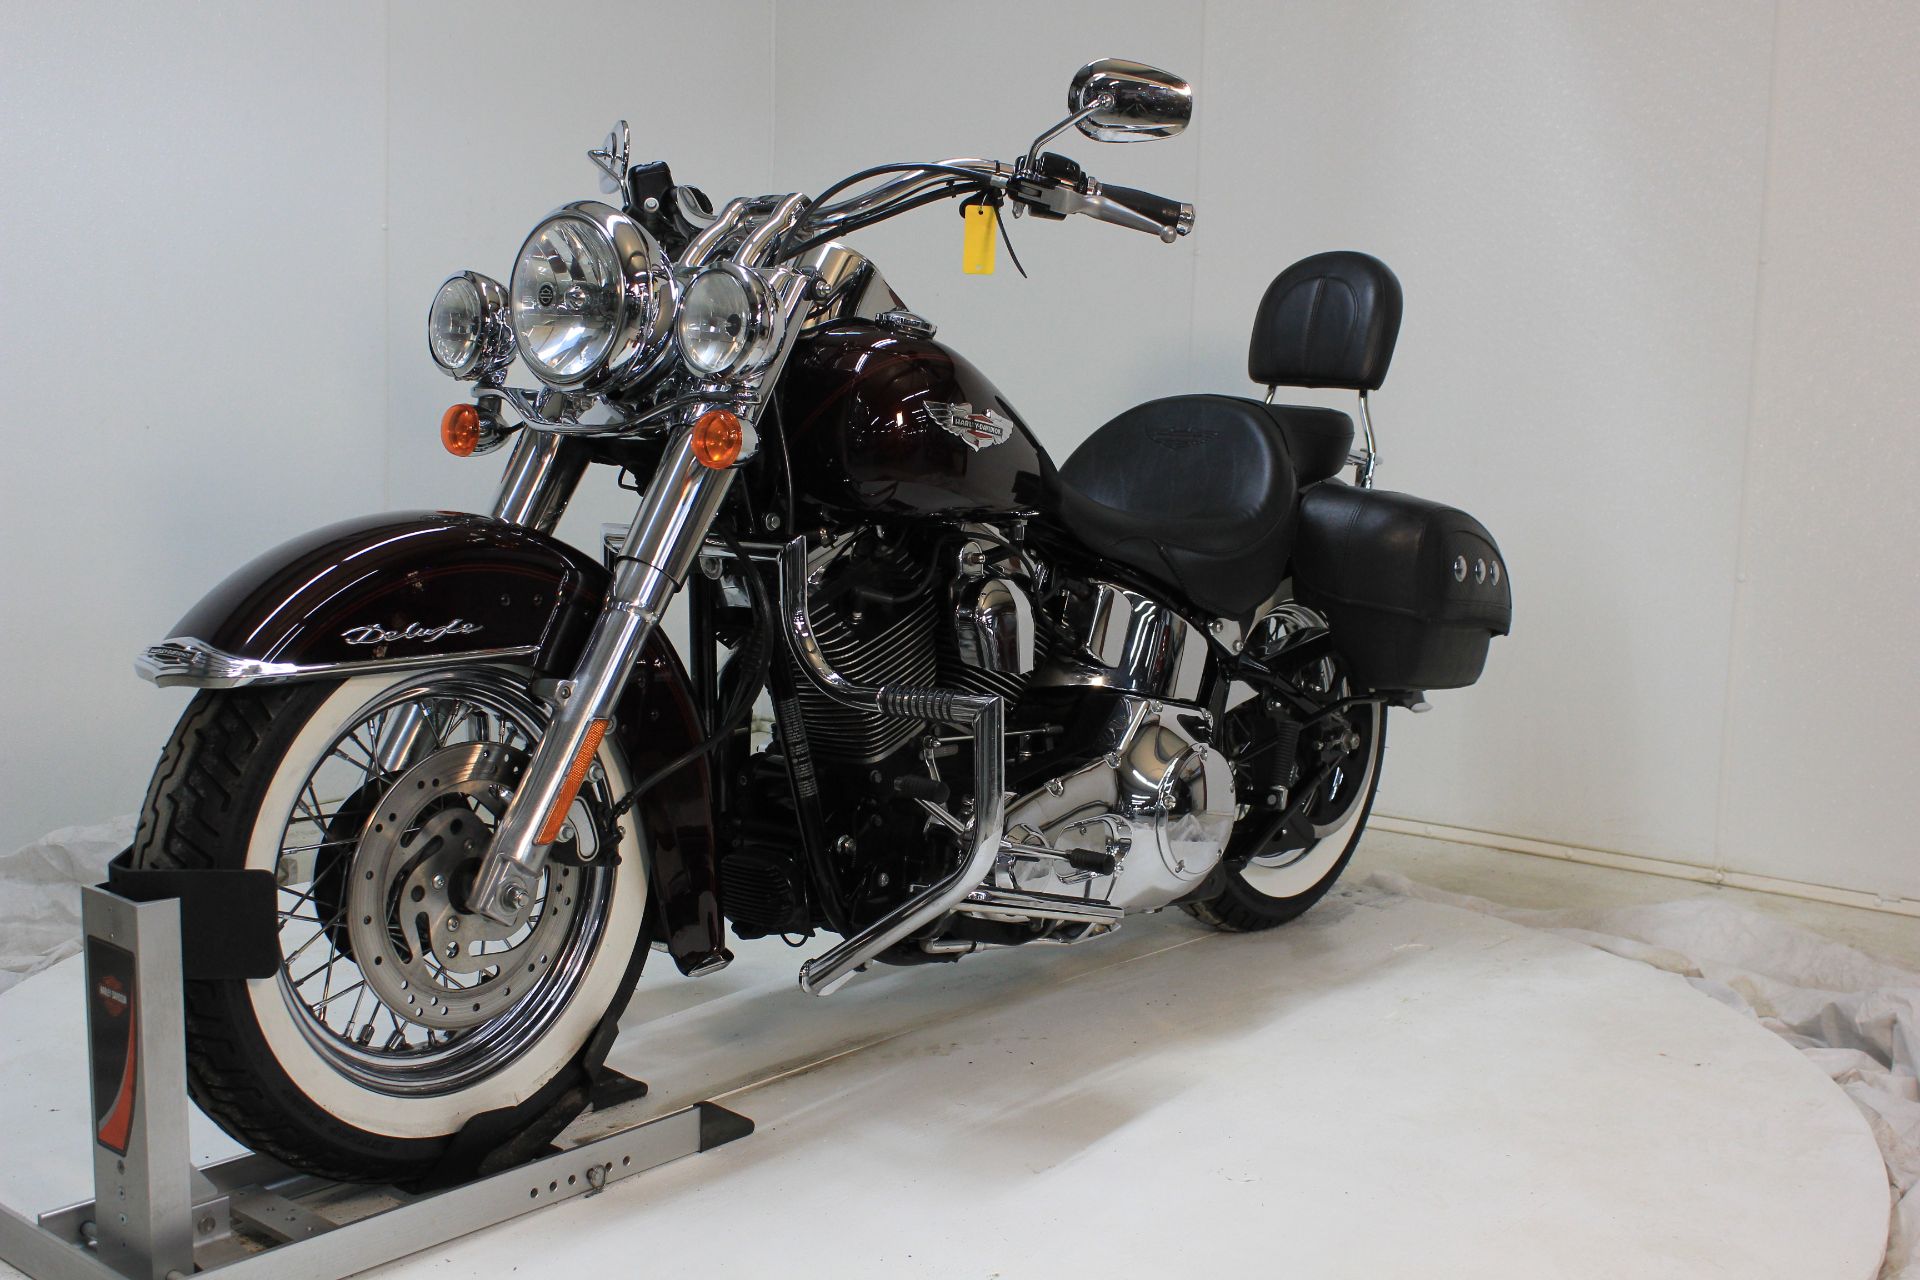 2006 Harley-Davidson Softail® Deluxe in Pittsfield, Massachusetts - Photo 12